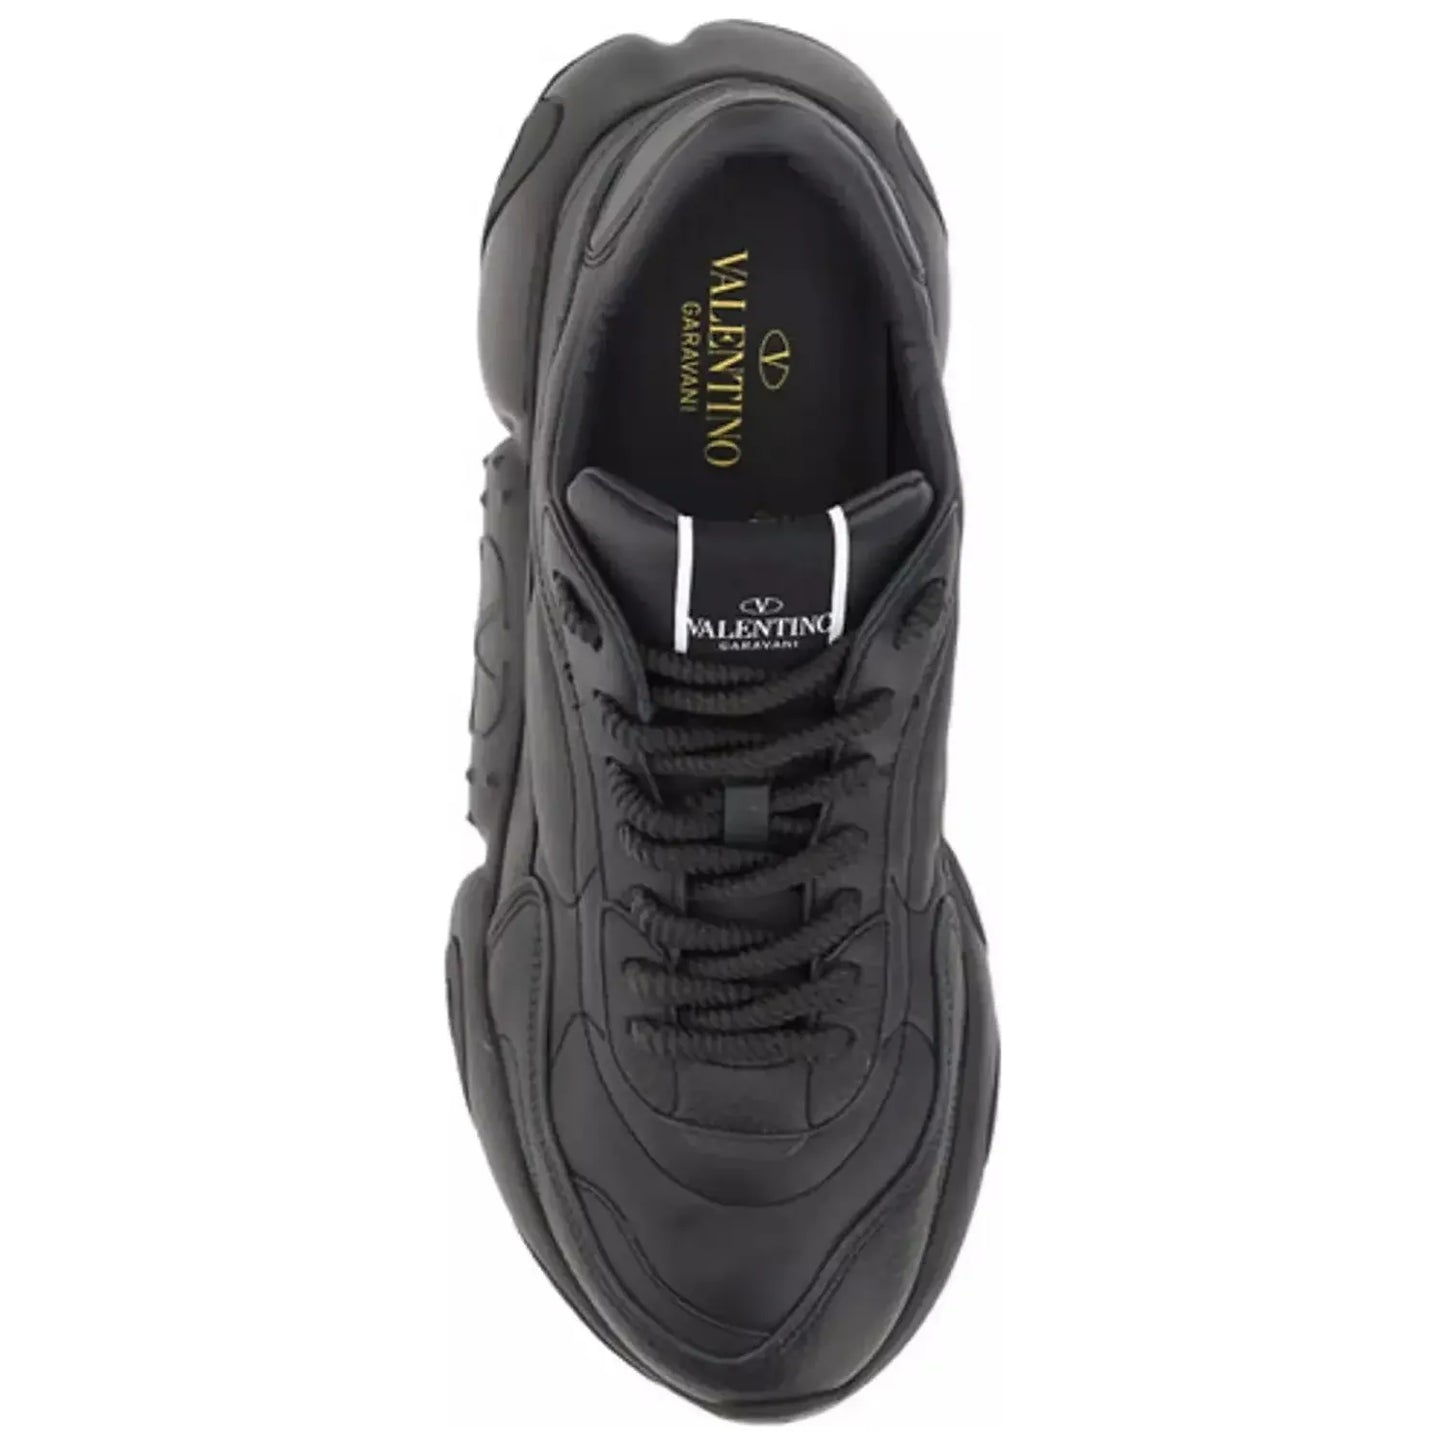 Valentino Elevated Elegance Low-Top Leather Sneakers black-calf-leather-garavani-sneakers MAN SNEAKERS 8cbf4a2243cfb5cf502619d4cd88a1fa-dbd6c472-fdc.webp